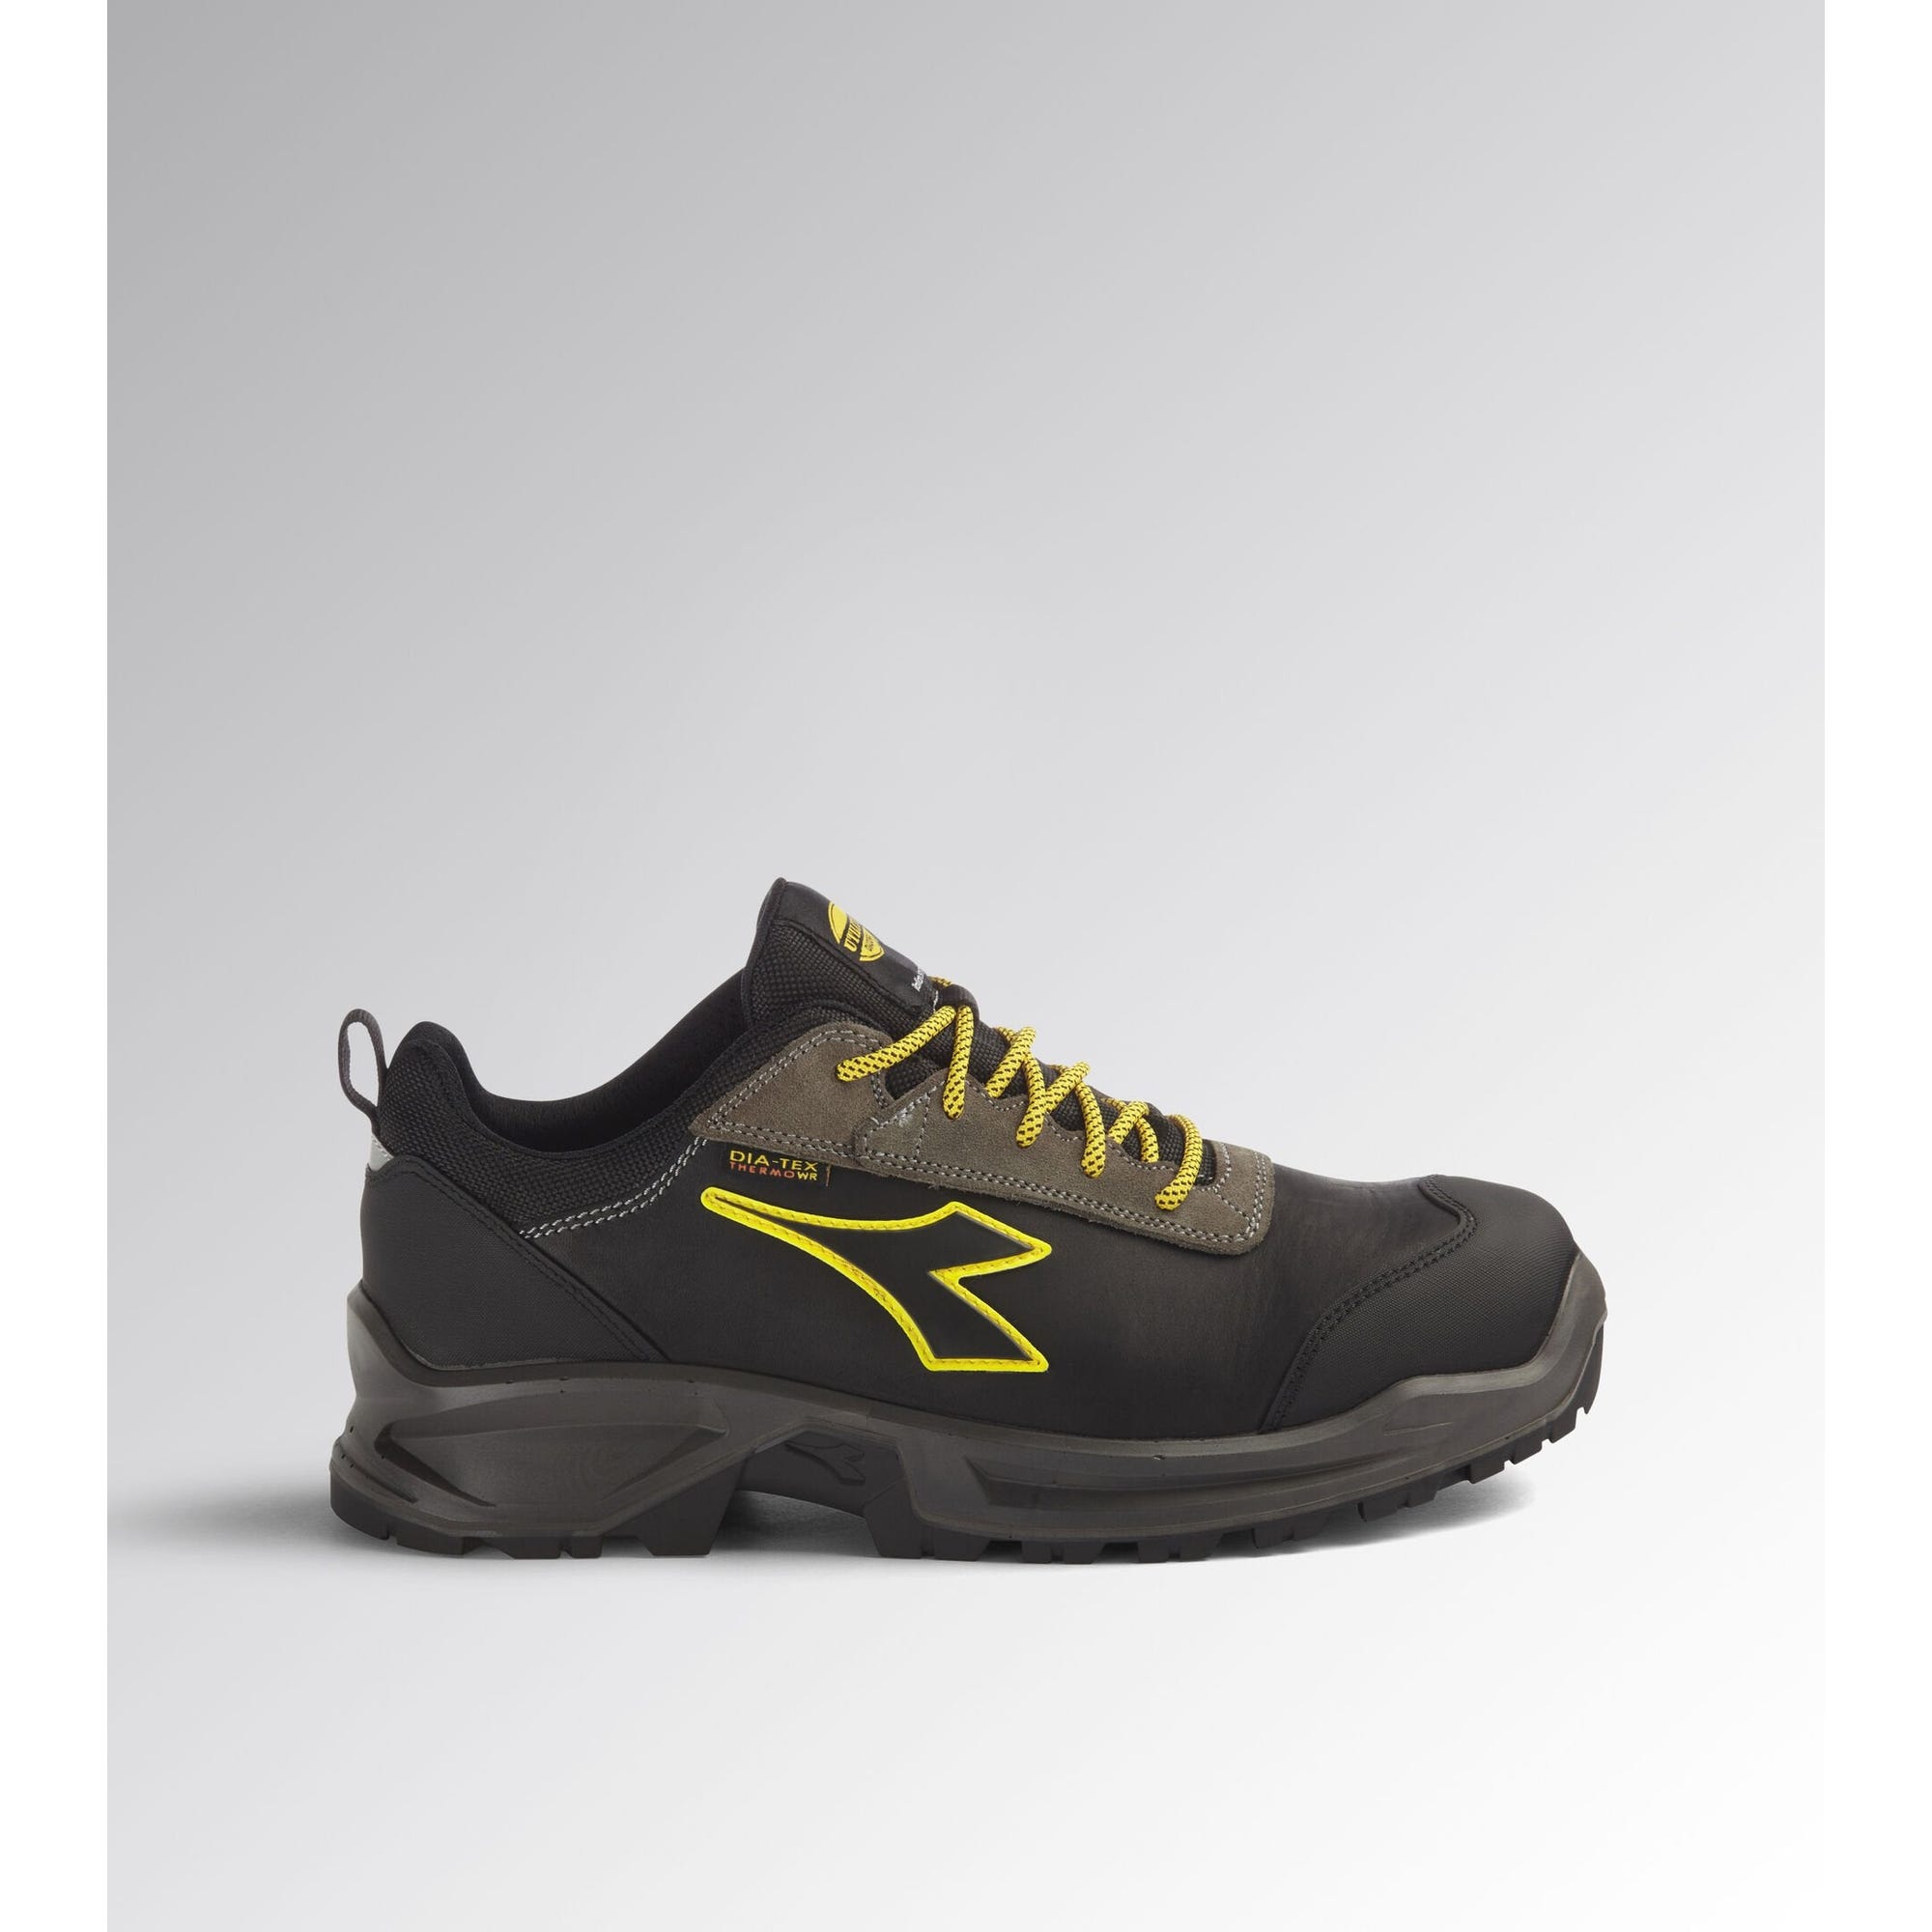 Chaussures imperméables thermo-isolantes SPORT DIATEX S3 Noir / Jaune 44 5